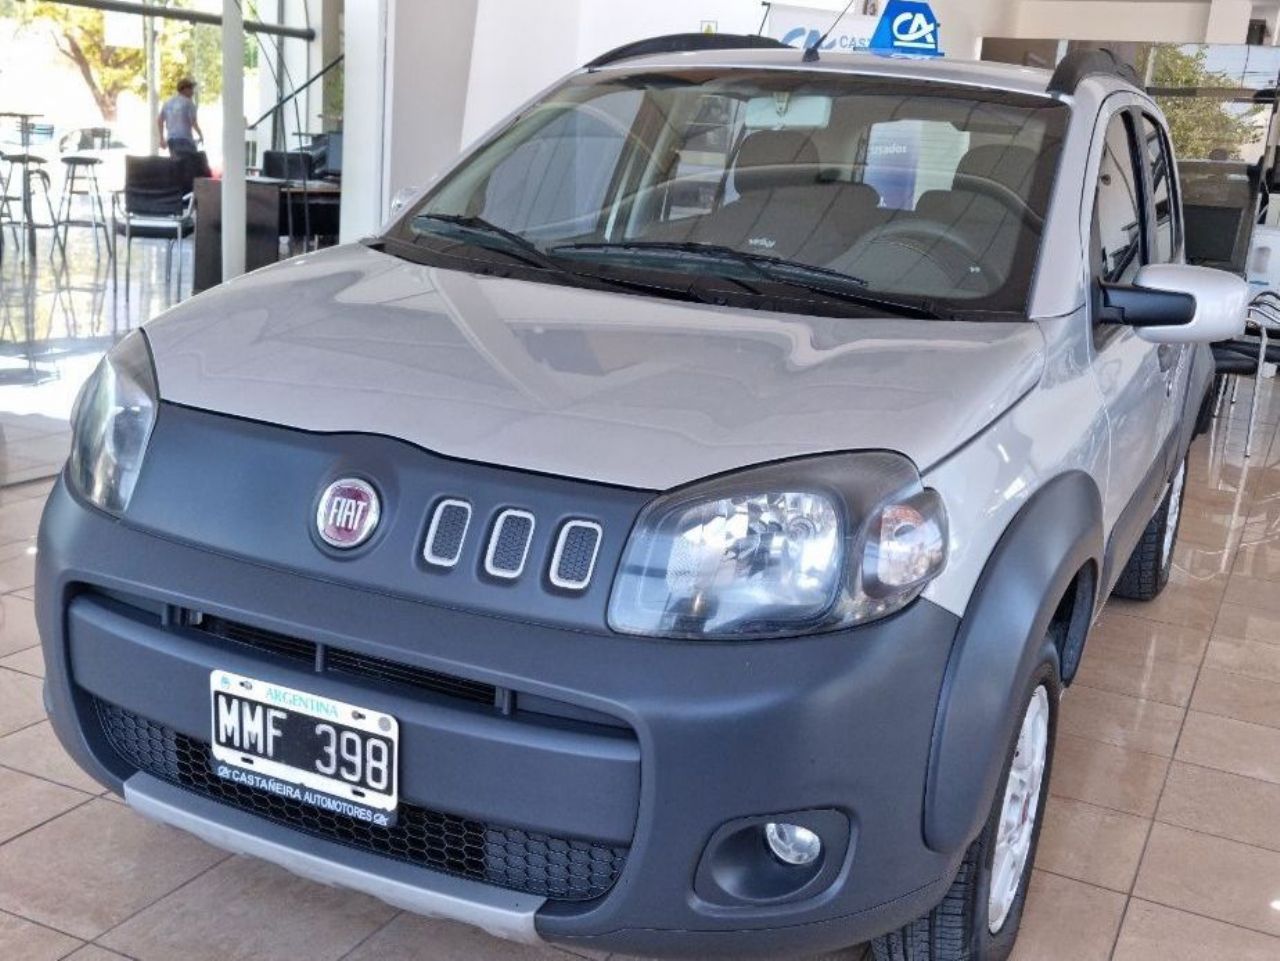 Fiat Uno Evo Usado en Córdoba, deRuedas